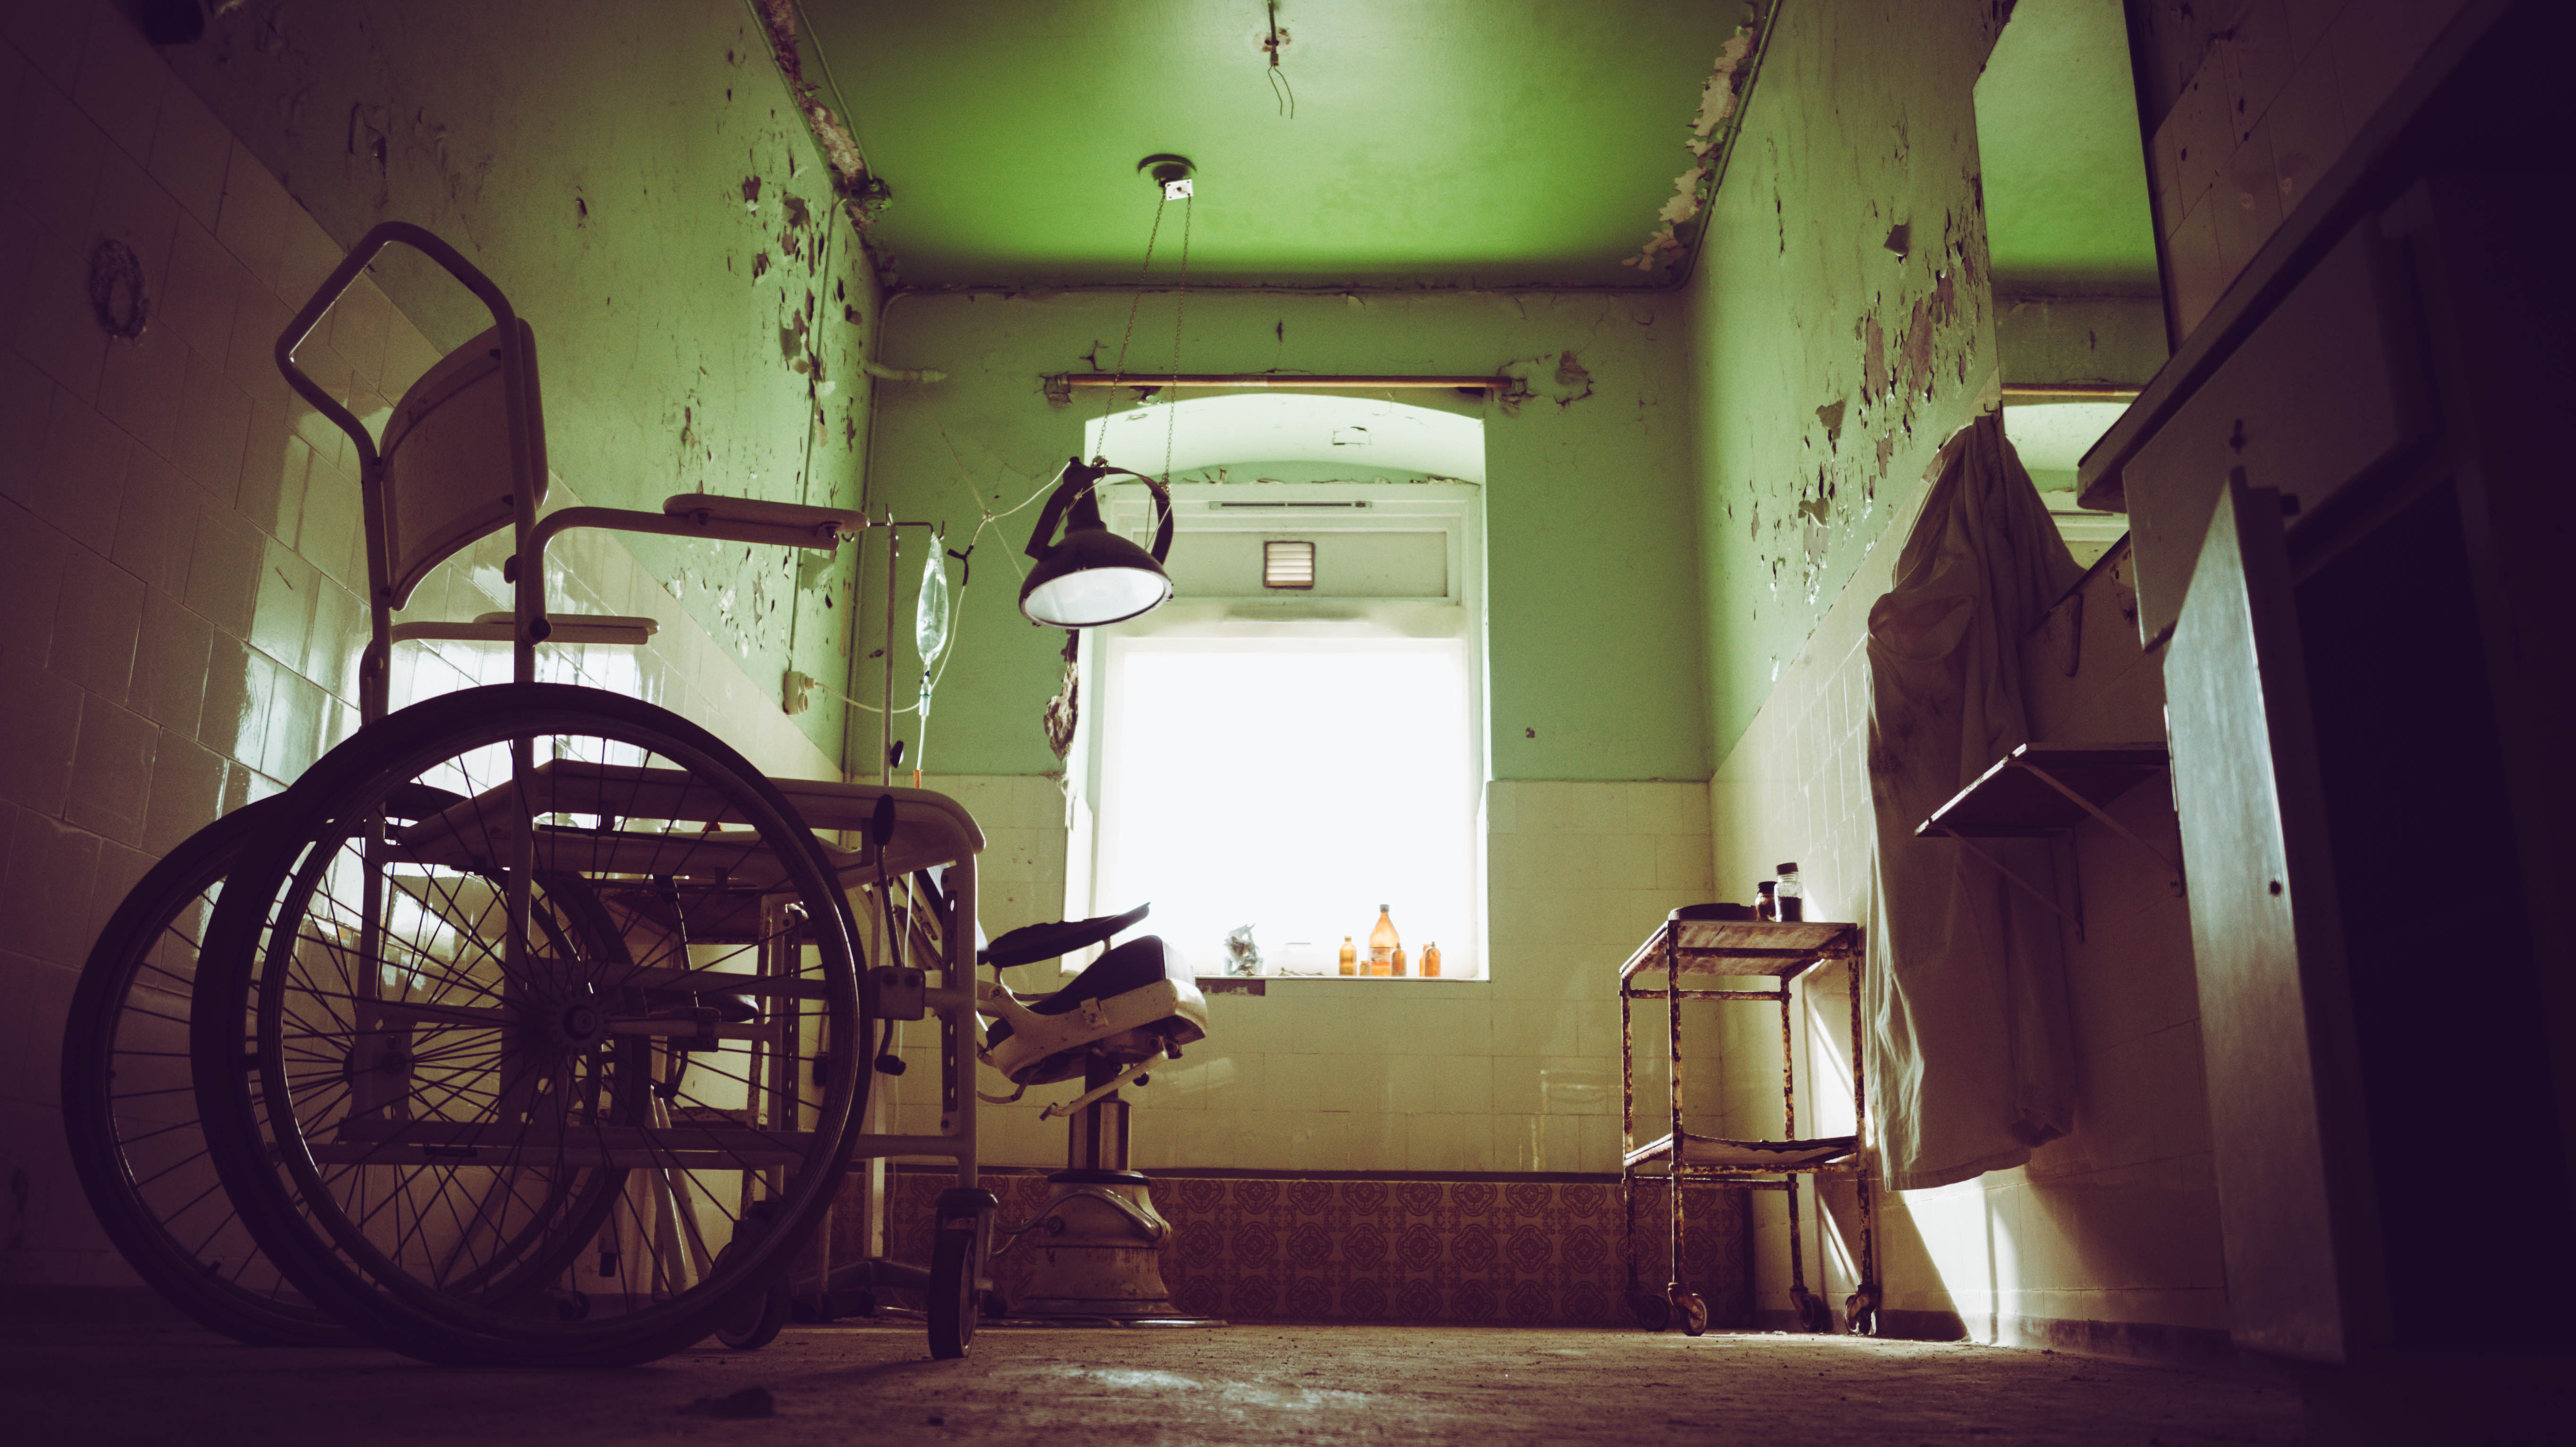 Hospital Wheelchair Asylum Abandoned Urbex Horror Urban Decay Filter 5456x3064